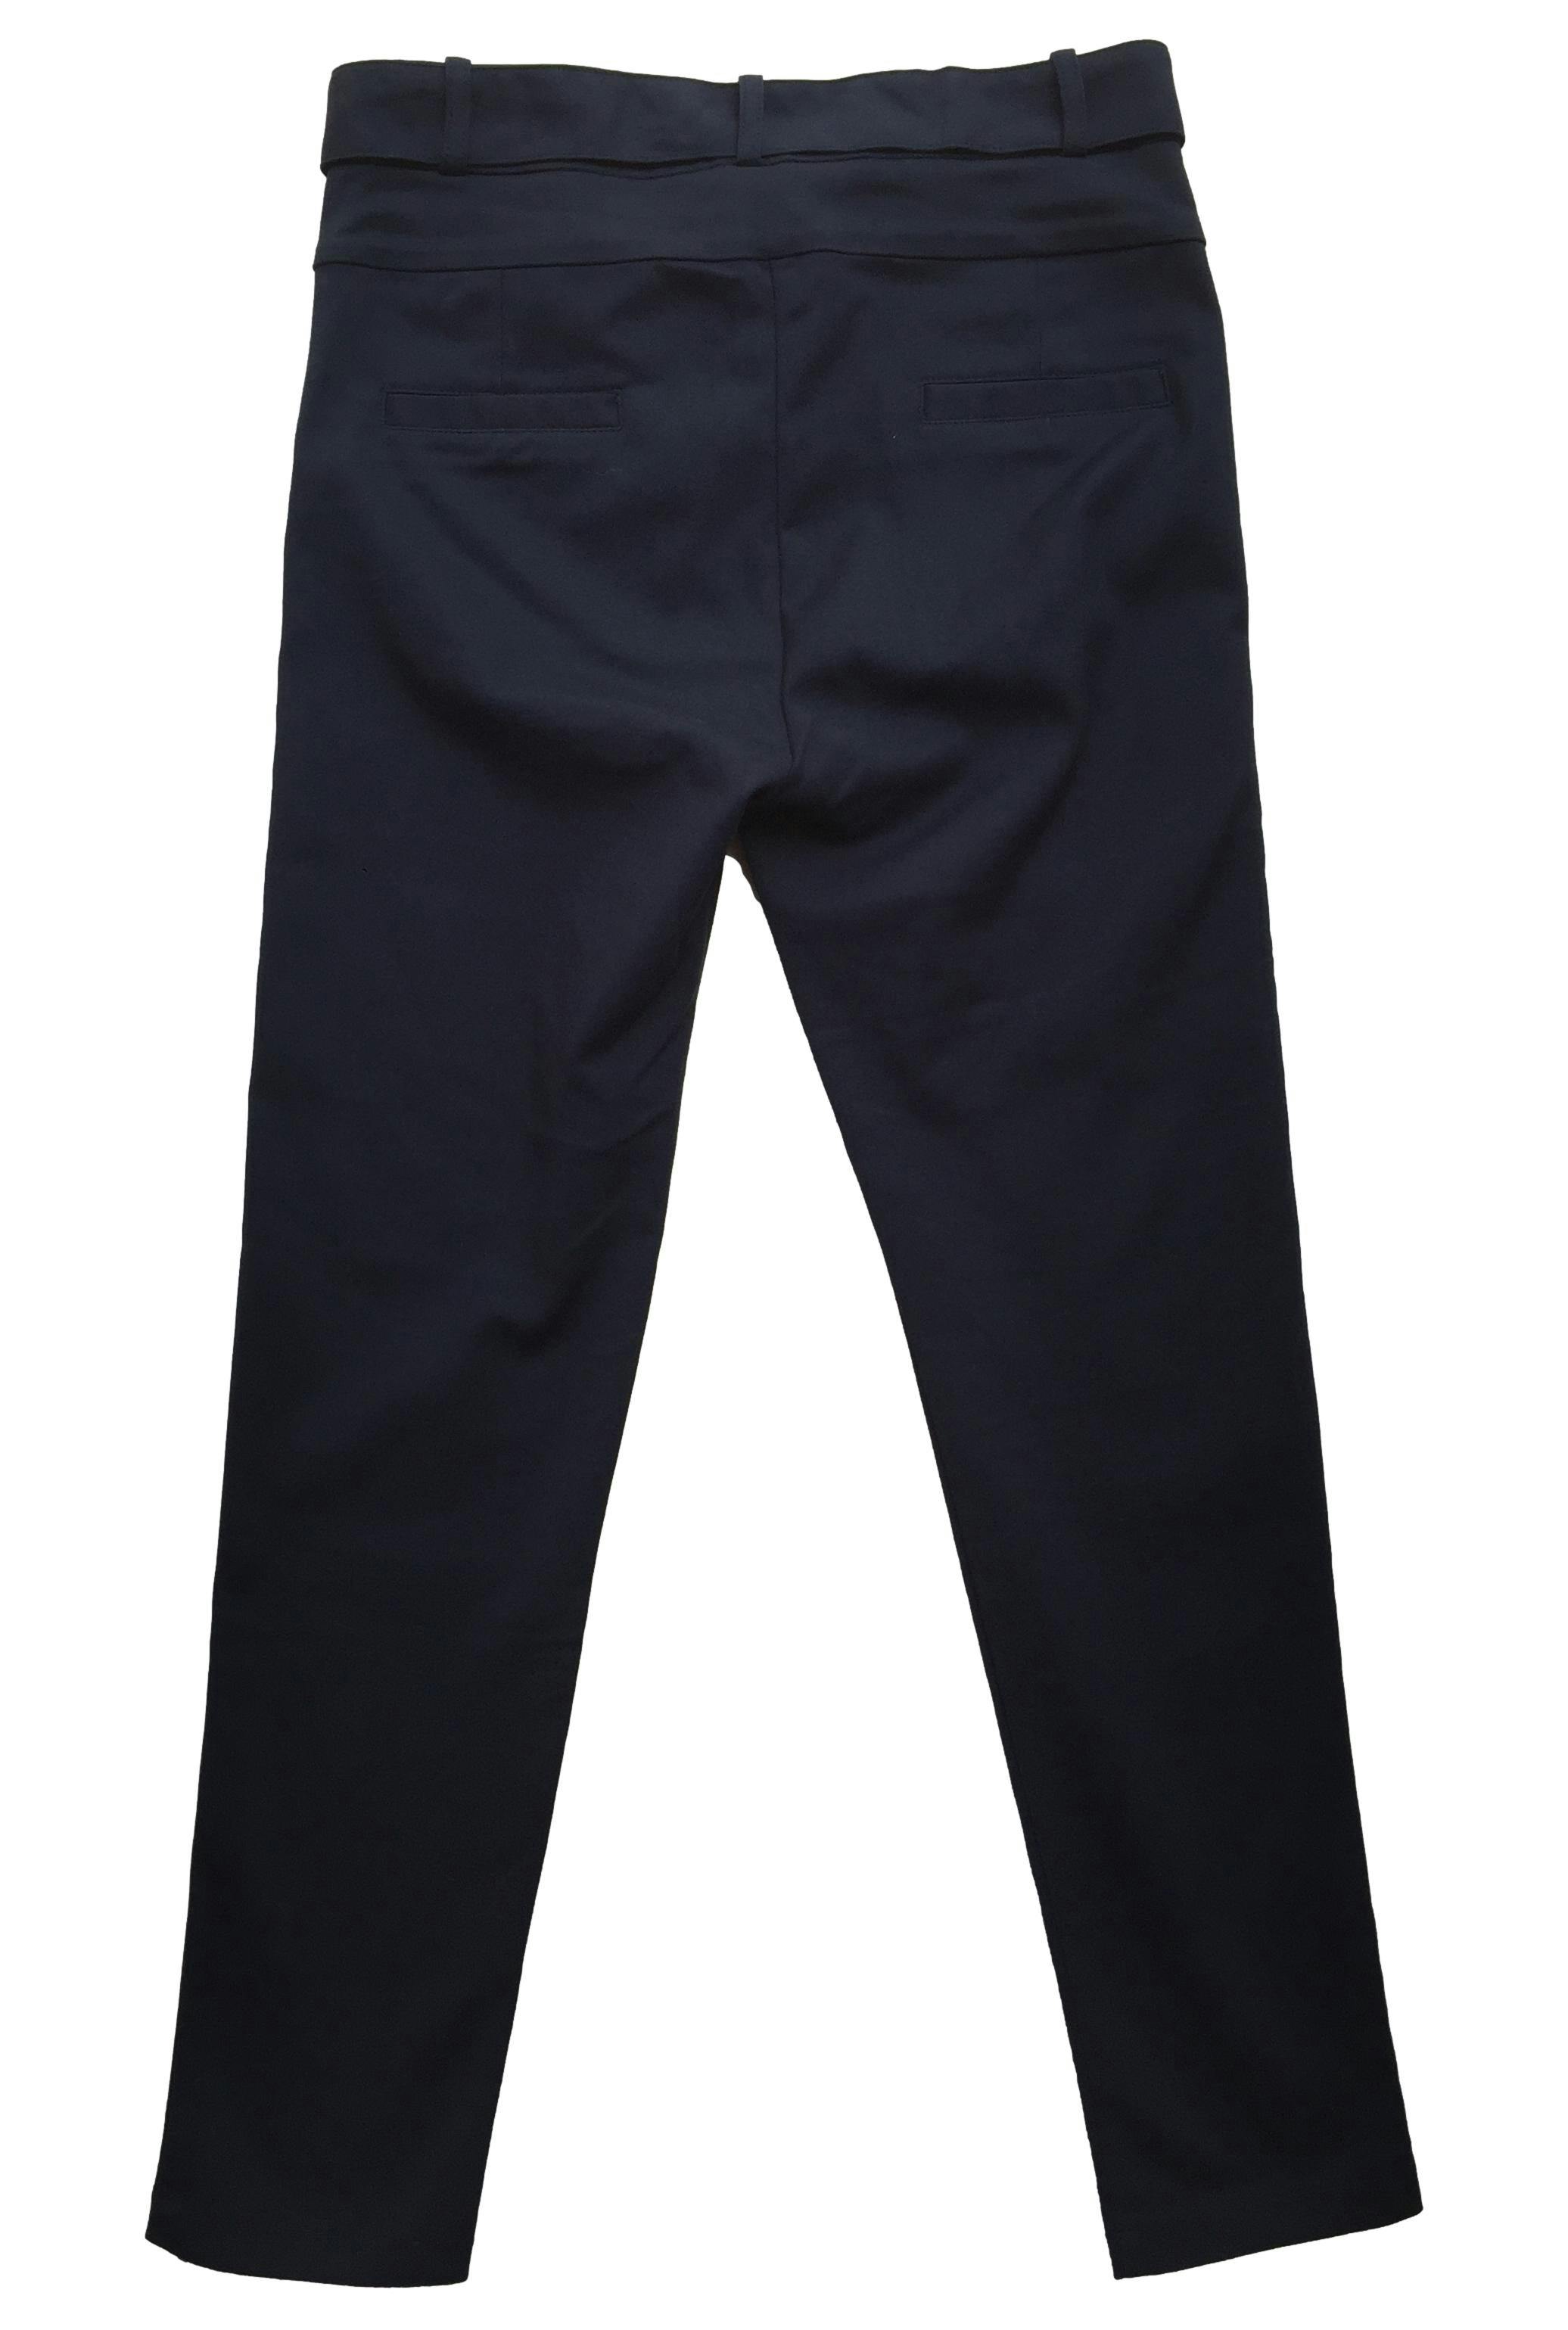 Pantalón slim azul marino con cinturón y falsos bolsillos. Cintura 80cm, Tiro 27cm, Largo 95cm.